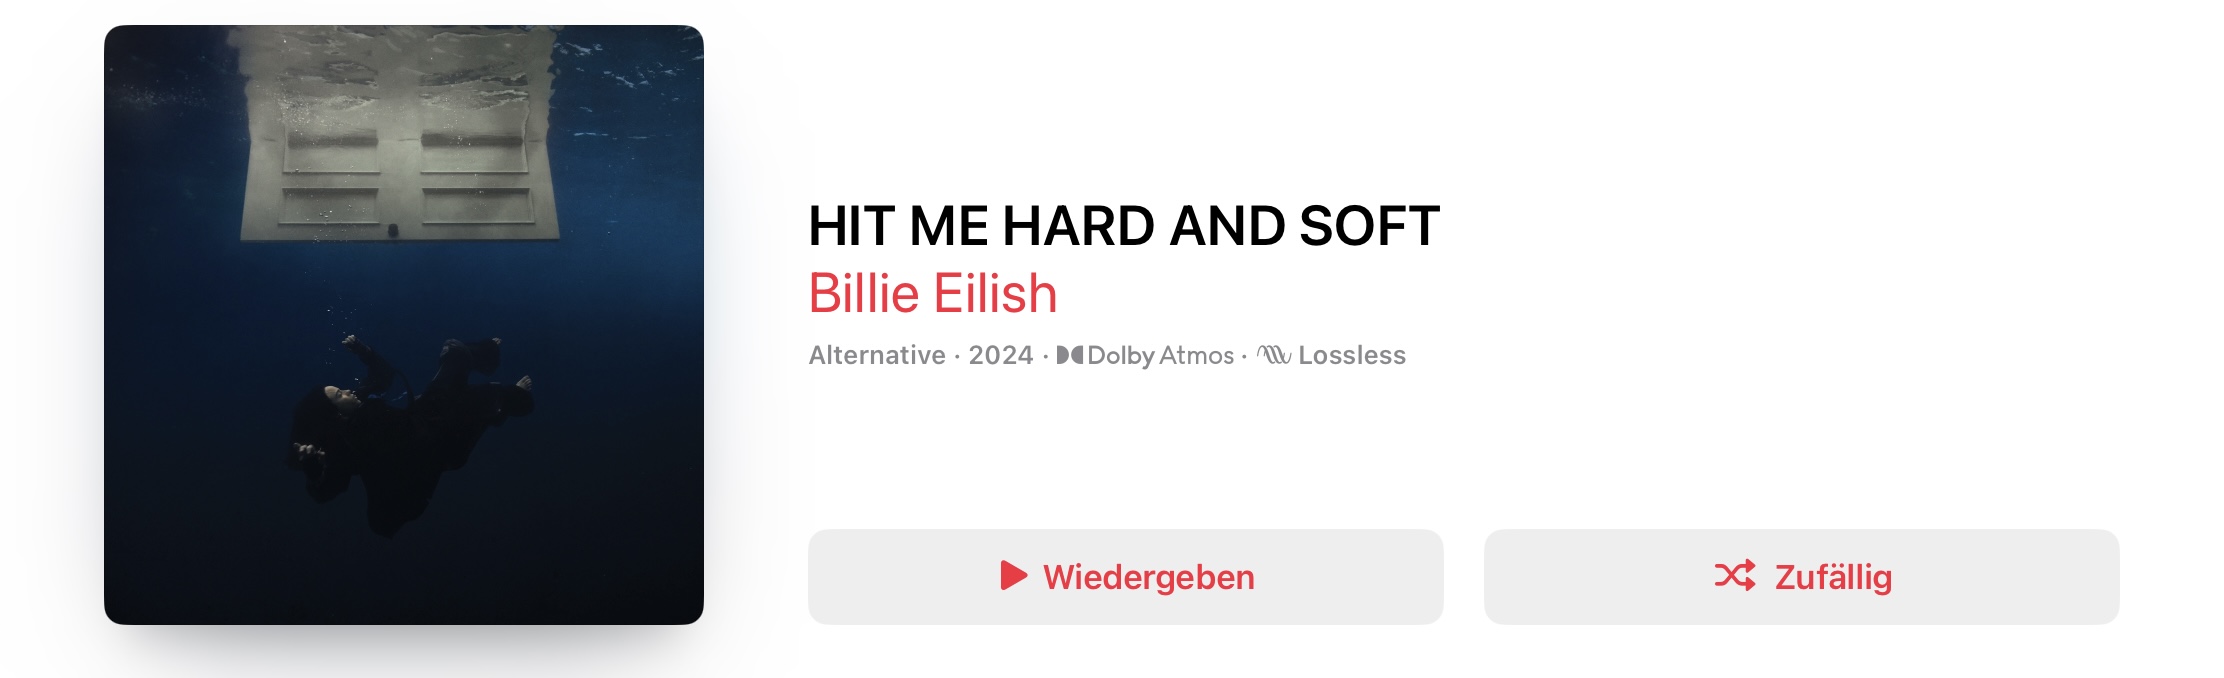 Billie Eilish Hit Me Hard And Soft Dolby Atmos